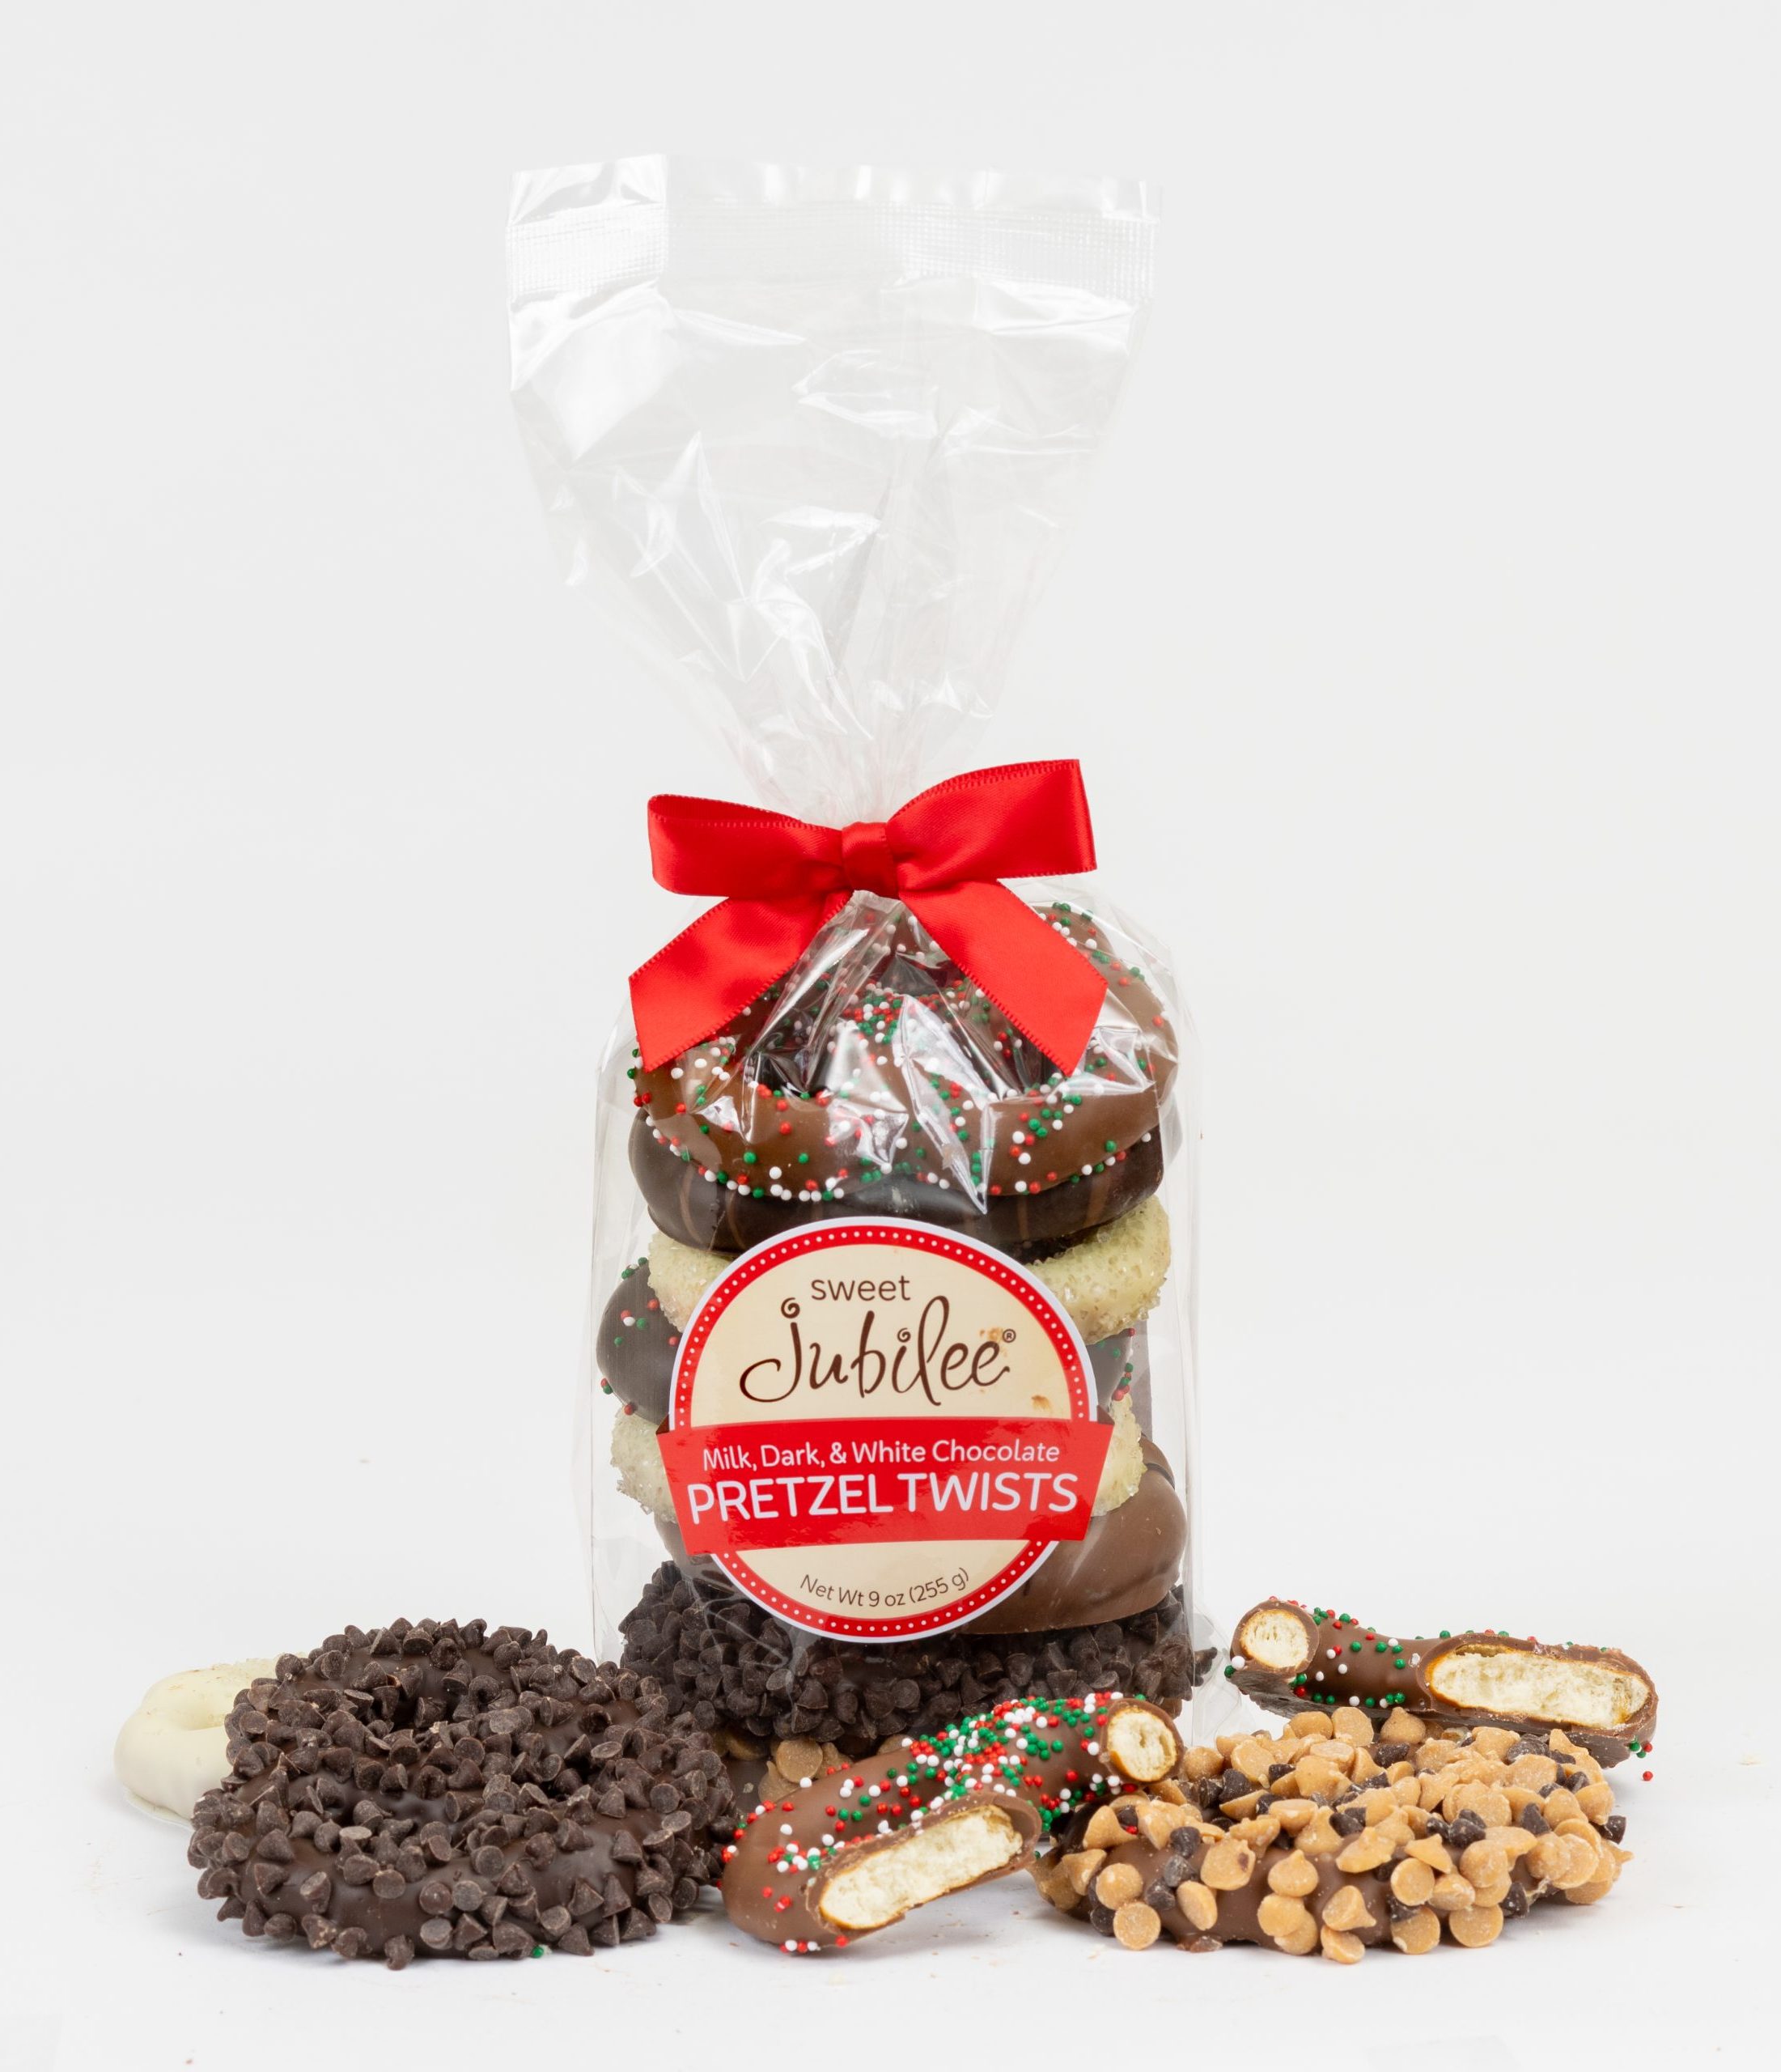 Assorted pretzel twists with gourmet chocolate